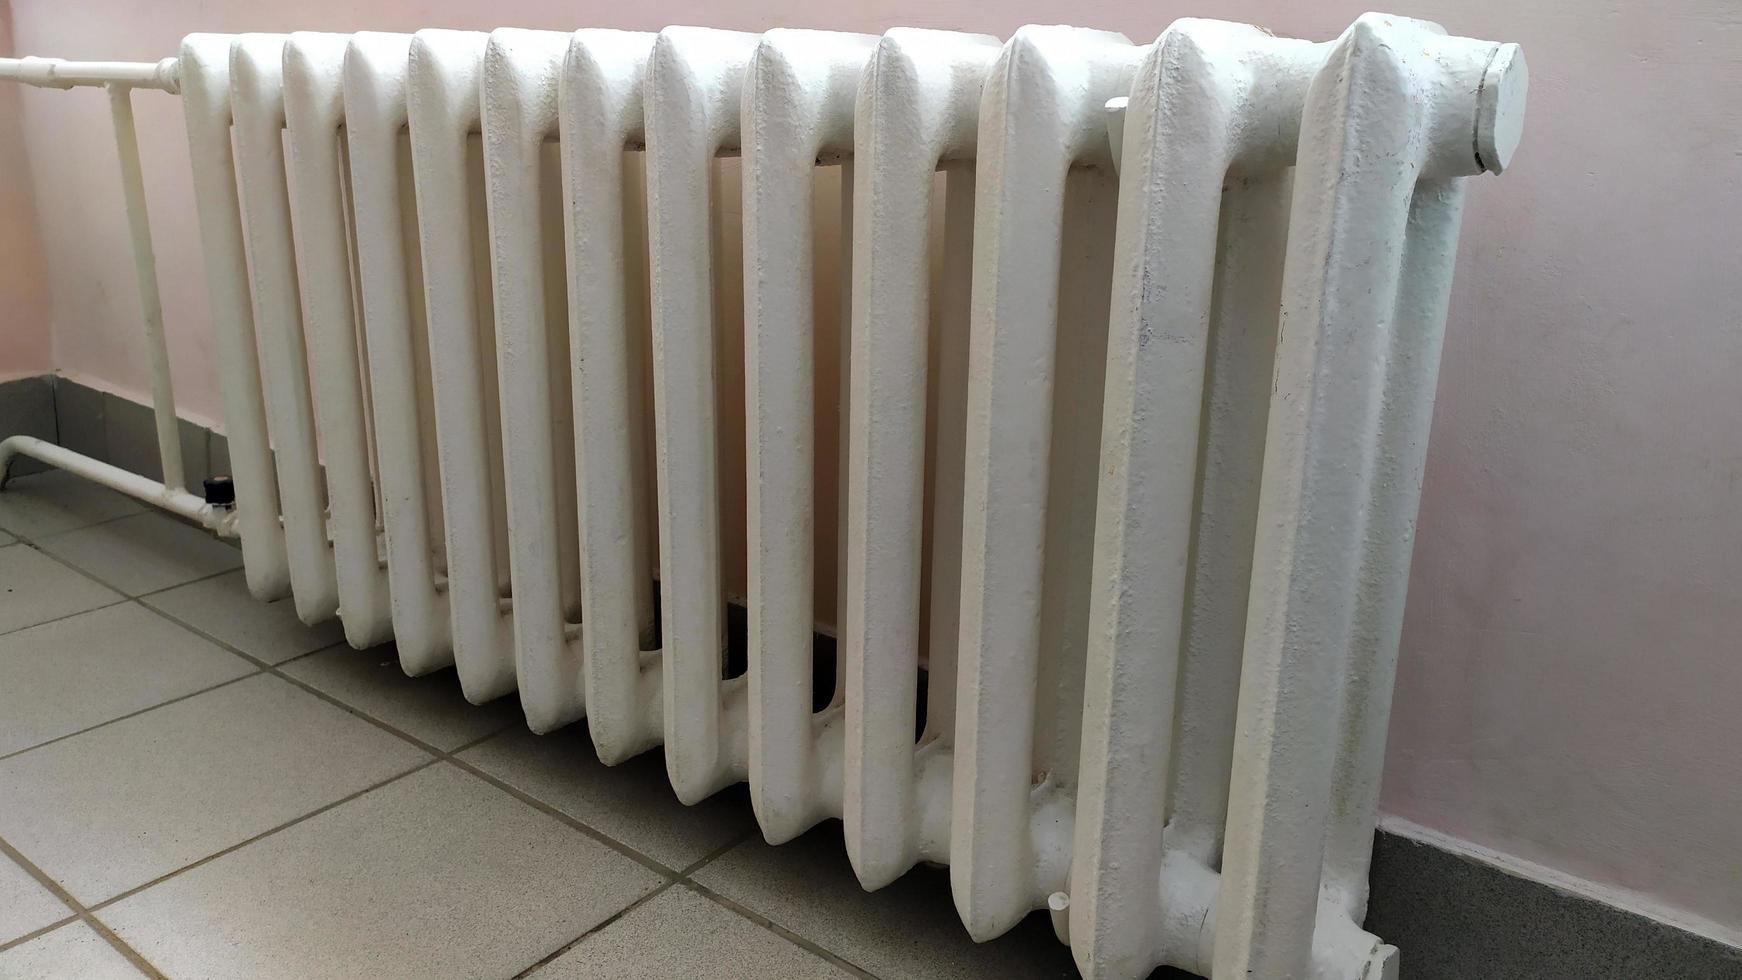 Indoor heating radiator. Cast iron radiators heat the room. photo